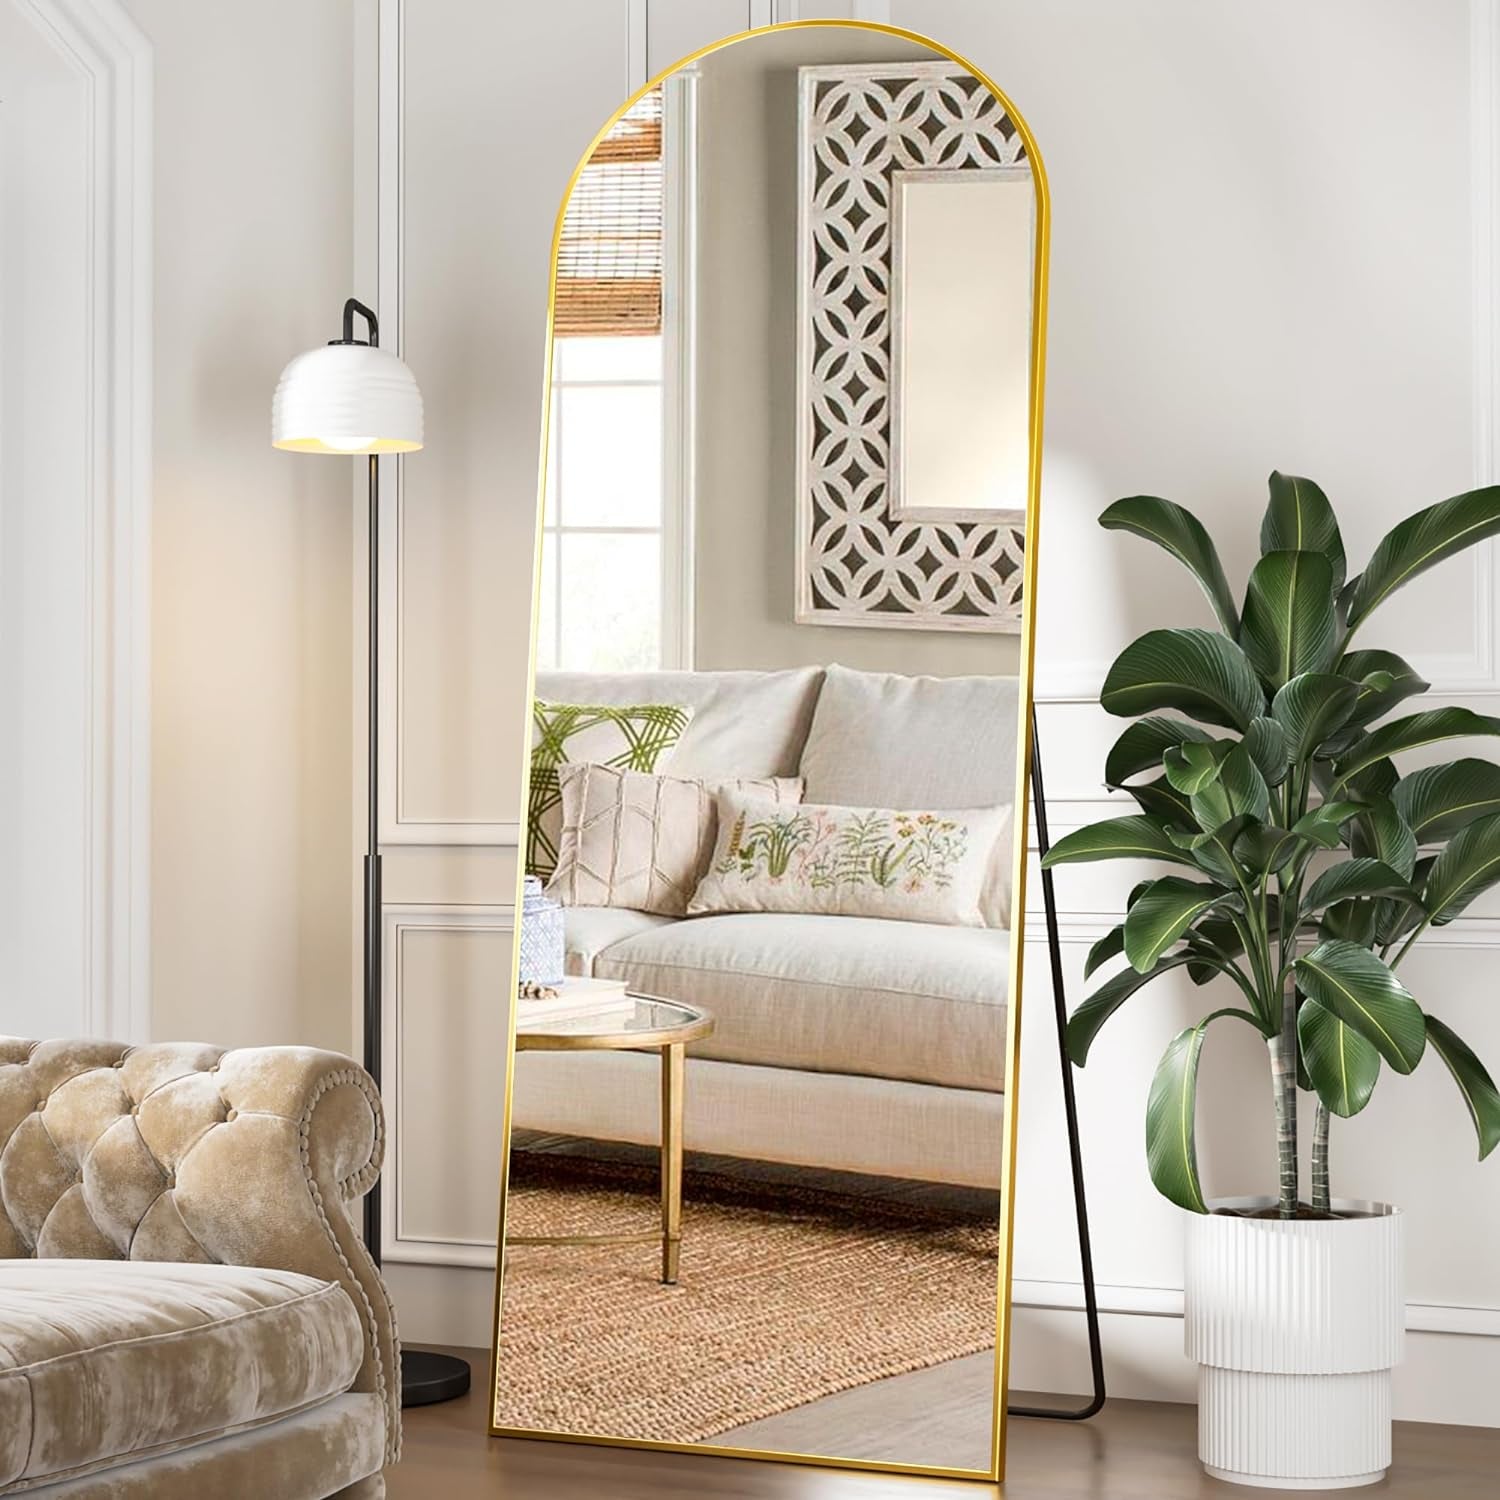 64X21 Inches Full Length Home Mirror, Freestanding Floor Mirror, Semi-Circle, Gold, Floor Mount, Modern, Aluminum, Living Room, Bedroom, Cloakroom - Design By Technique